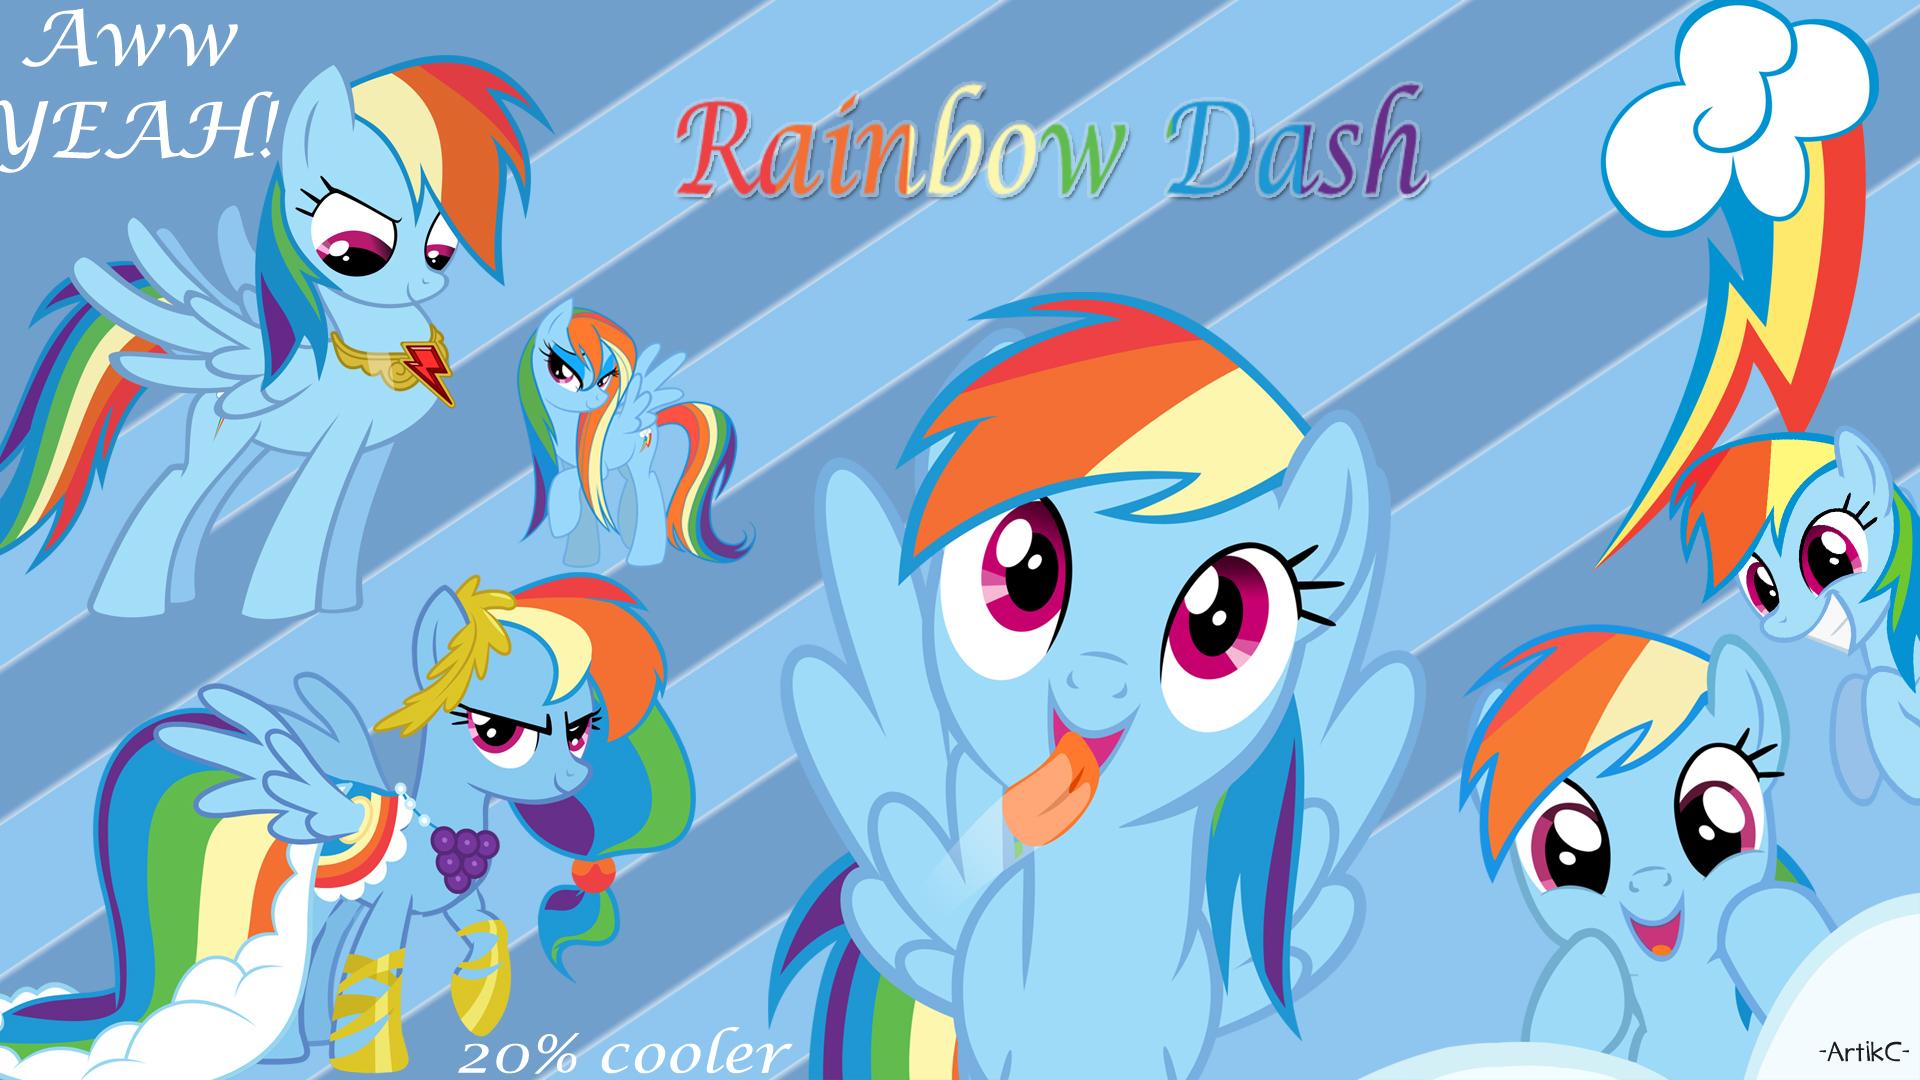 Aww Veah Rambow Dash 20% - Rainbow Dash Wallpaper My Little Pony - HD Wallpaper 